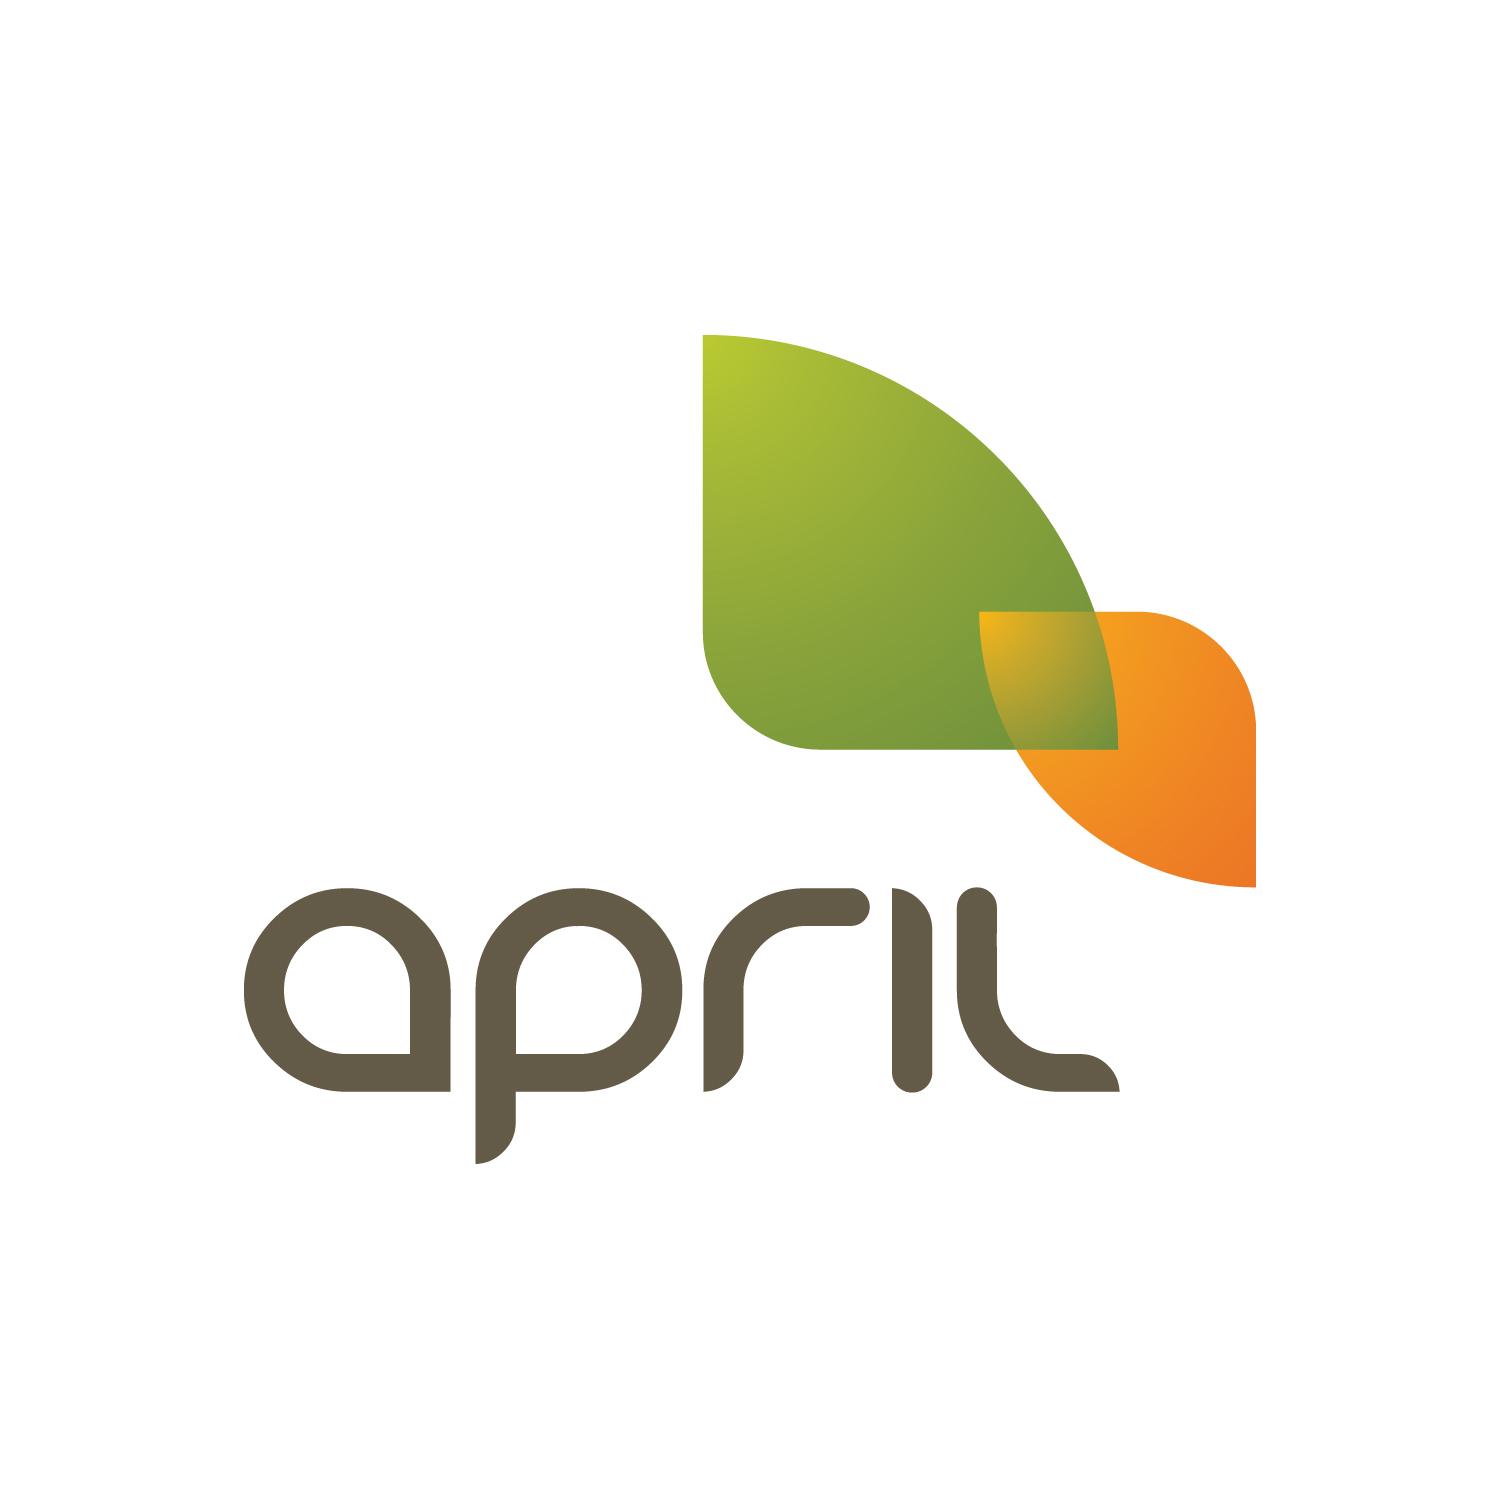 April Logo - april logo - Rice Inc